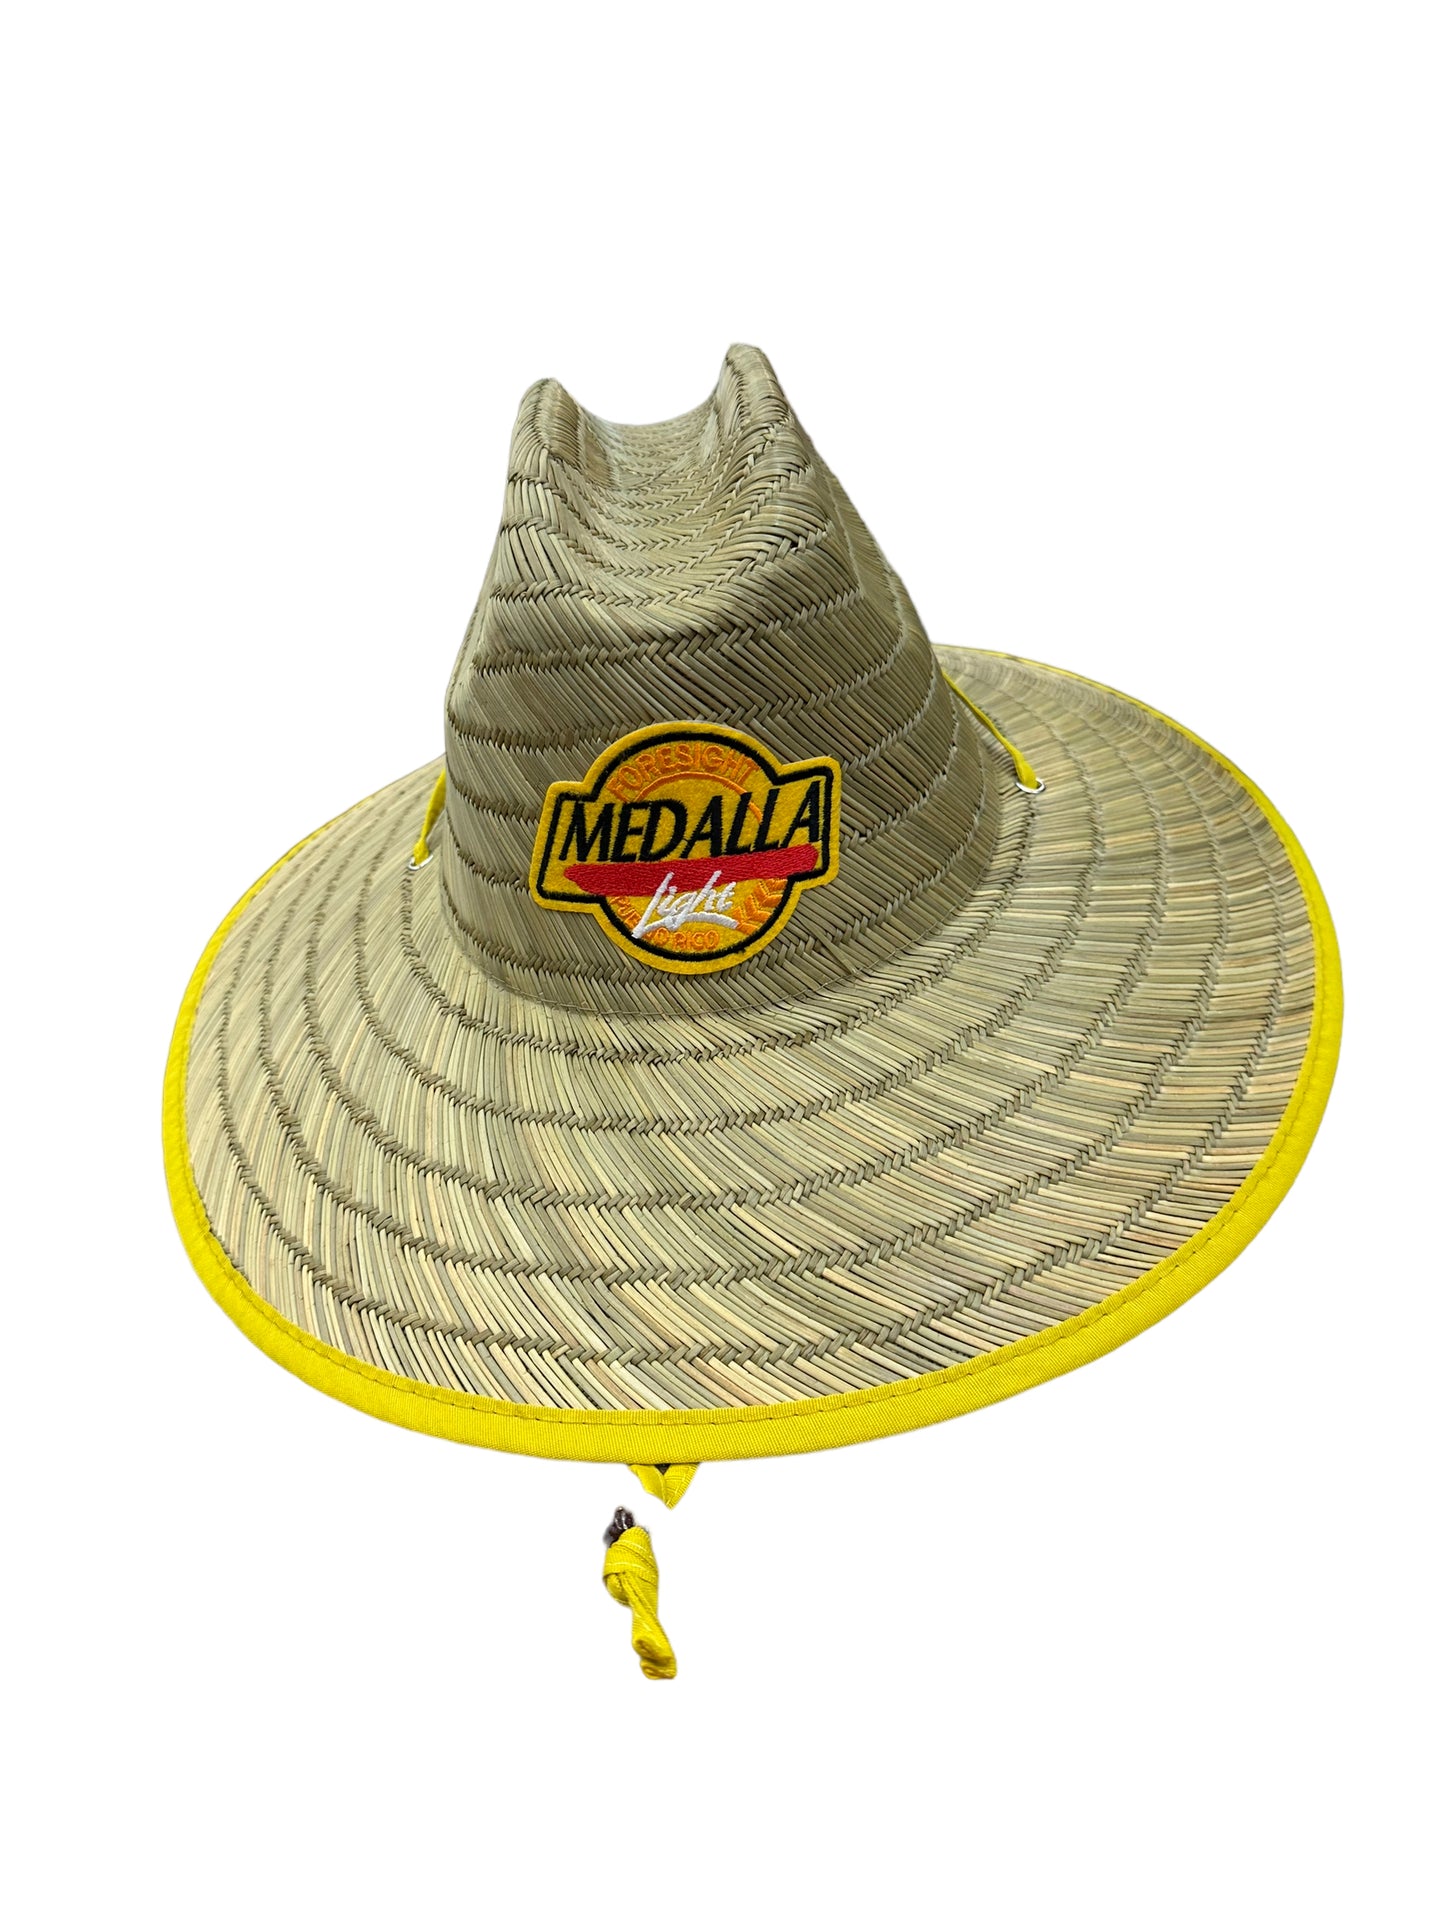 Puerto Rico Straw hat